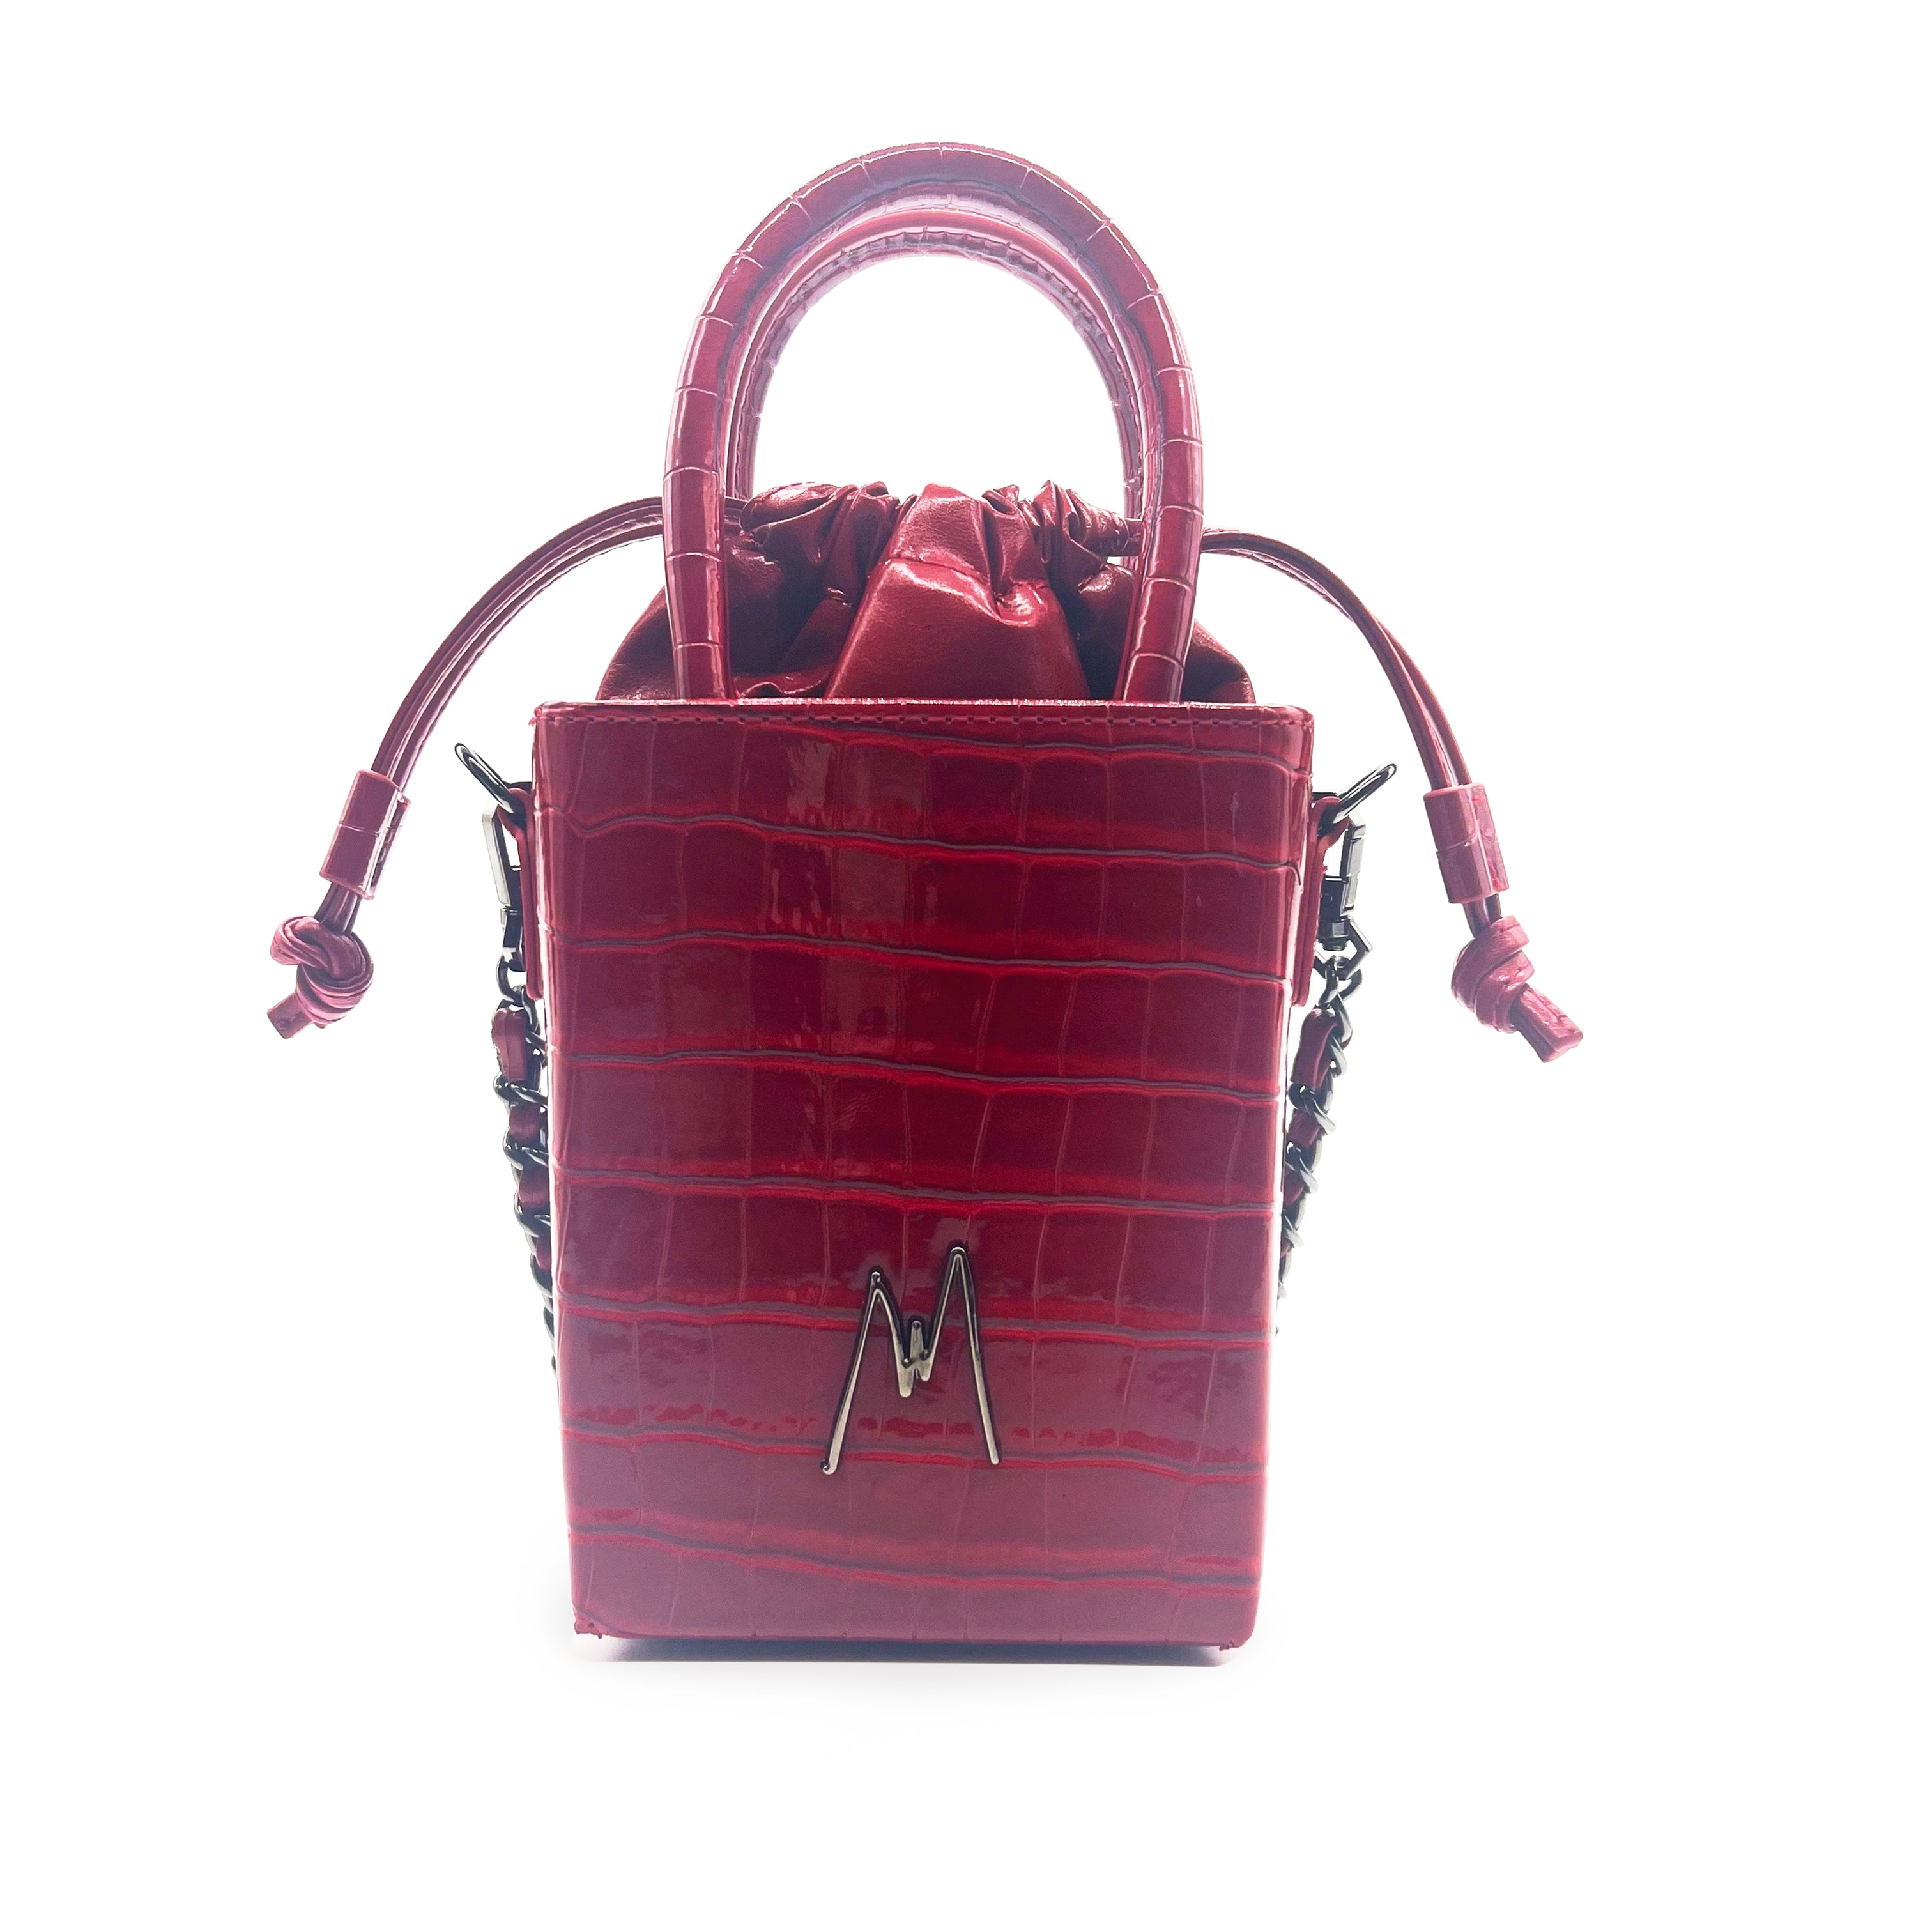 Buy Handmade Leather Tote Bag GIANNA City in Brick Red Croc Croco